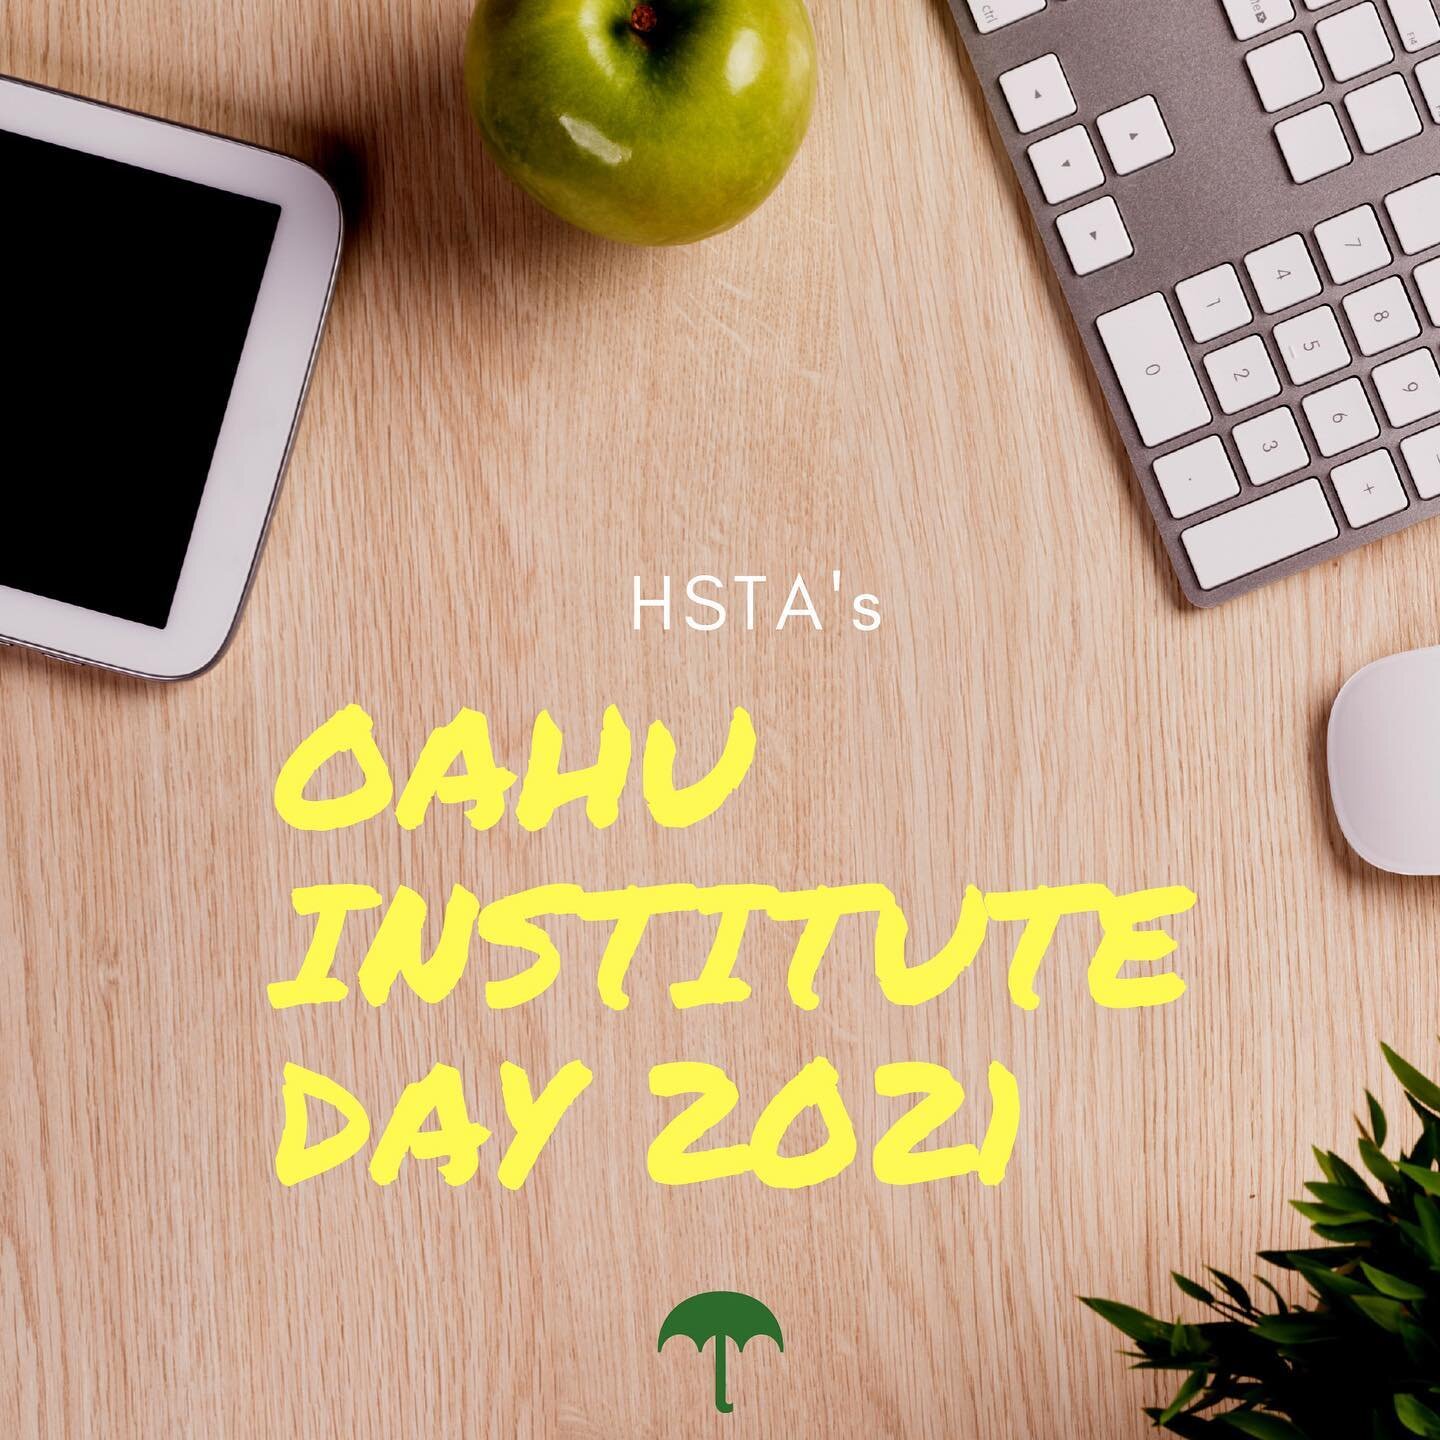 Happy Oahu Institute Day 2021, teachers! We hope today is filled with unity and renewed energy.
.
.
#windwardfinancial #hawaiiteachers #hsta #hawaiiteachersunited #hipubliced #808educate